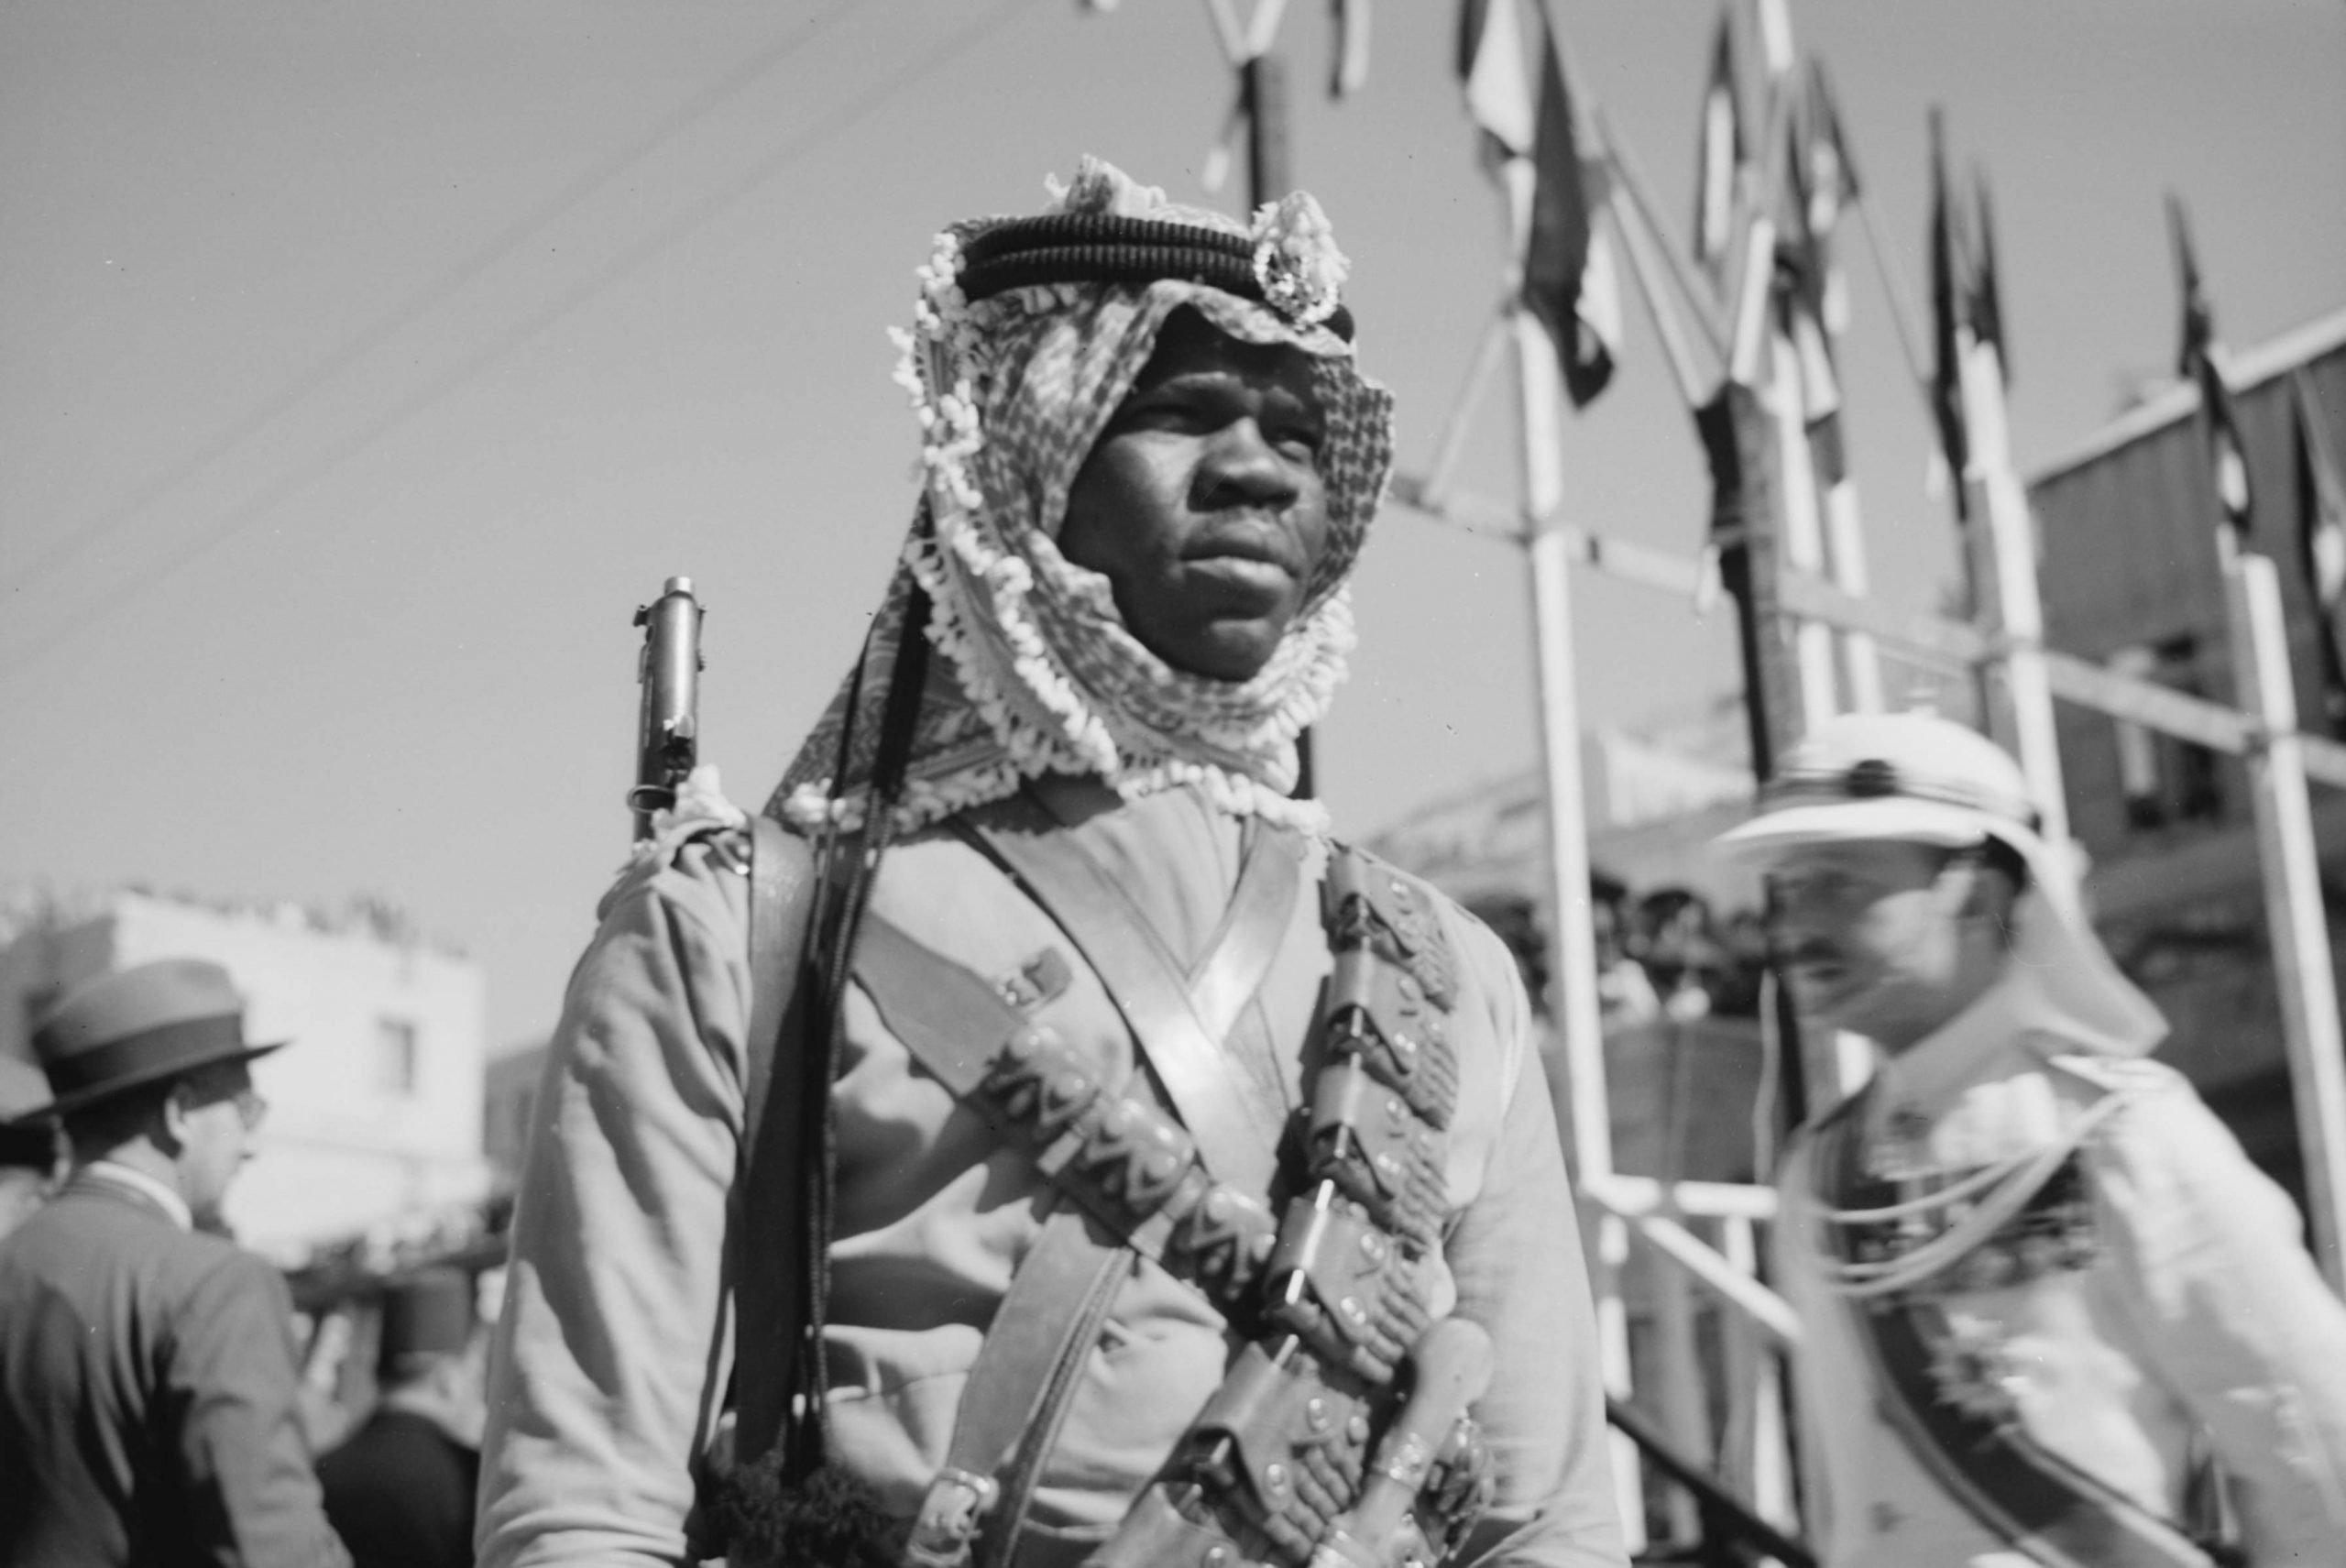 Soldier of the Arab Legion